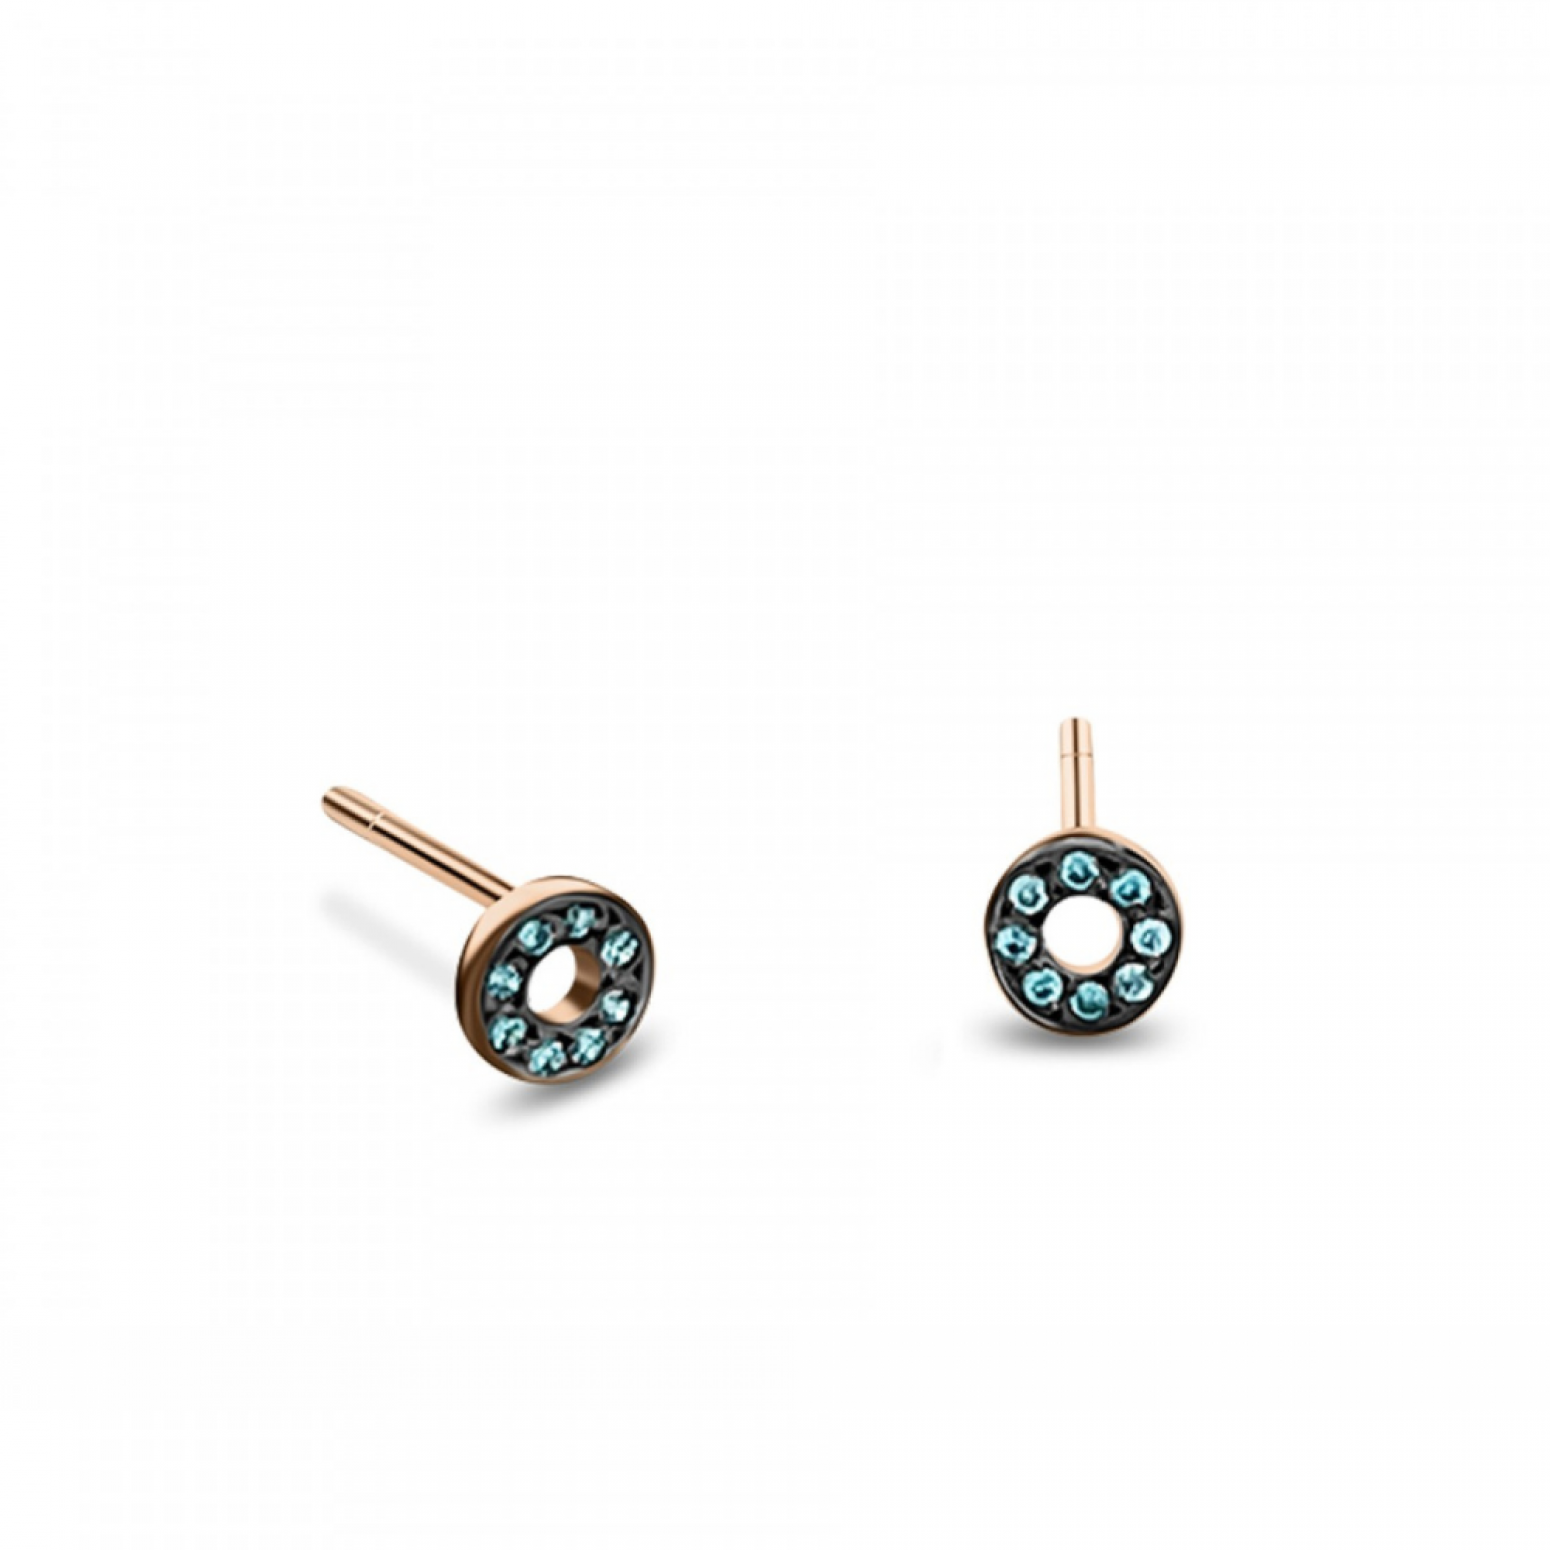 Round earrings K9 pink gold with blue zircon, sk3508 EARRINGS Κοσμηματα - chrilia.gr